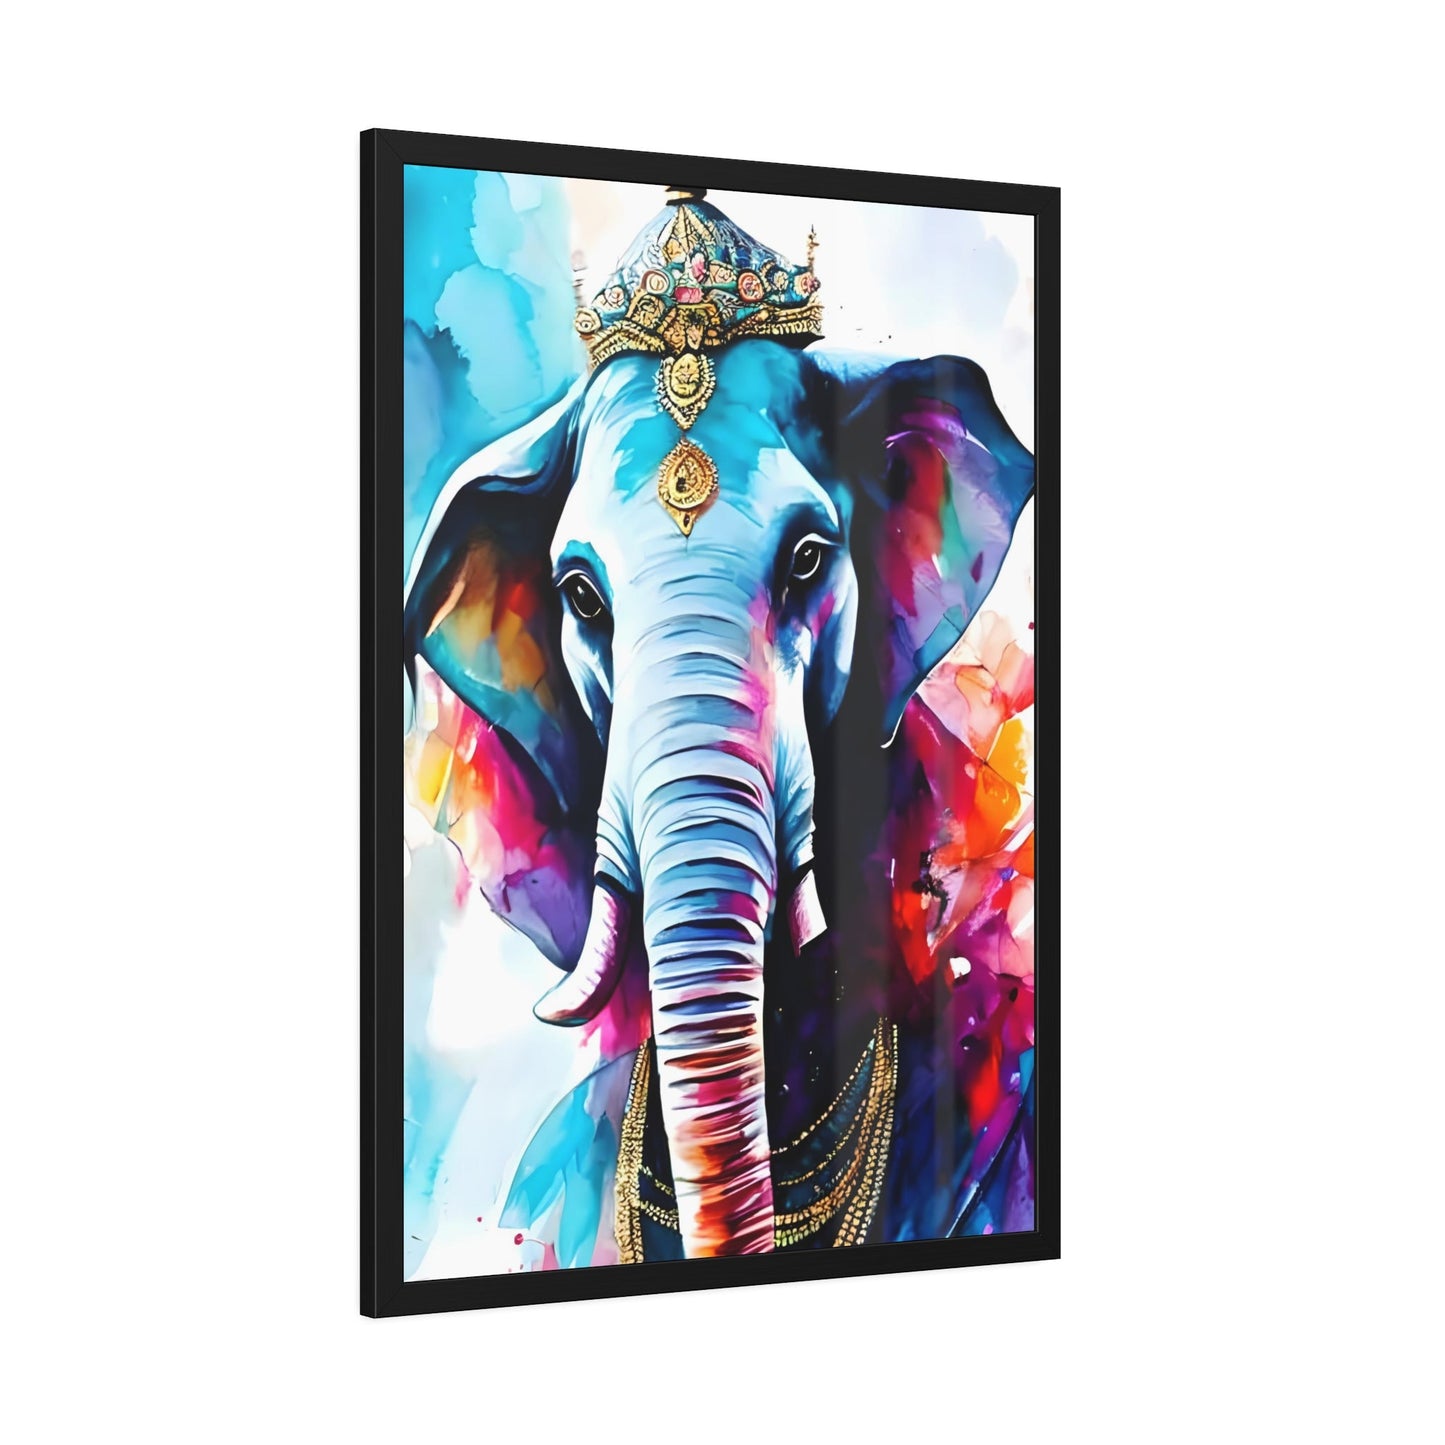 Safari Adventure: Artistic Print on Canvas of Elephant